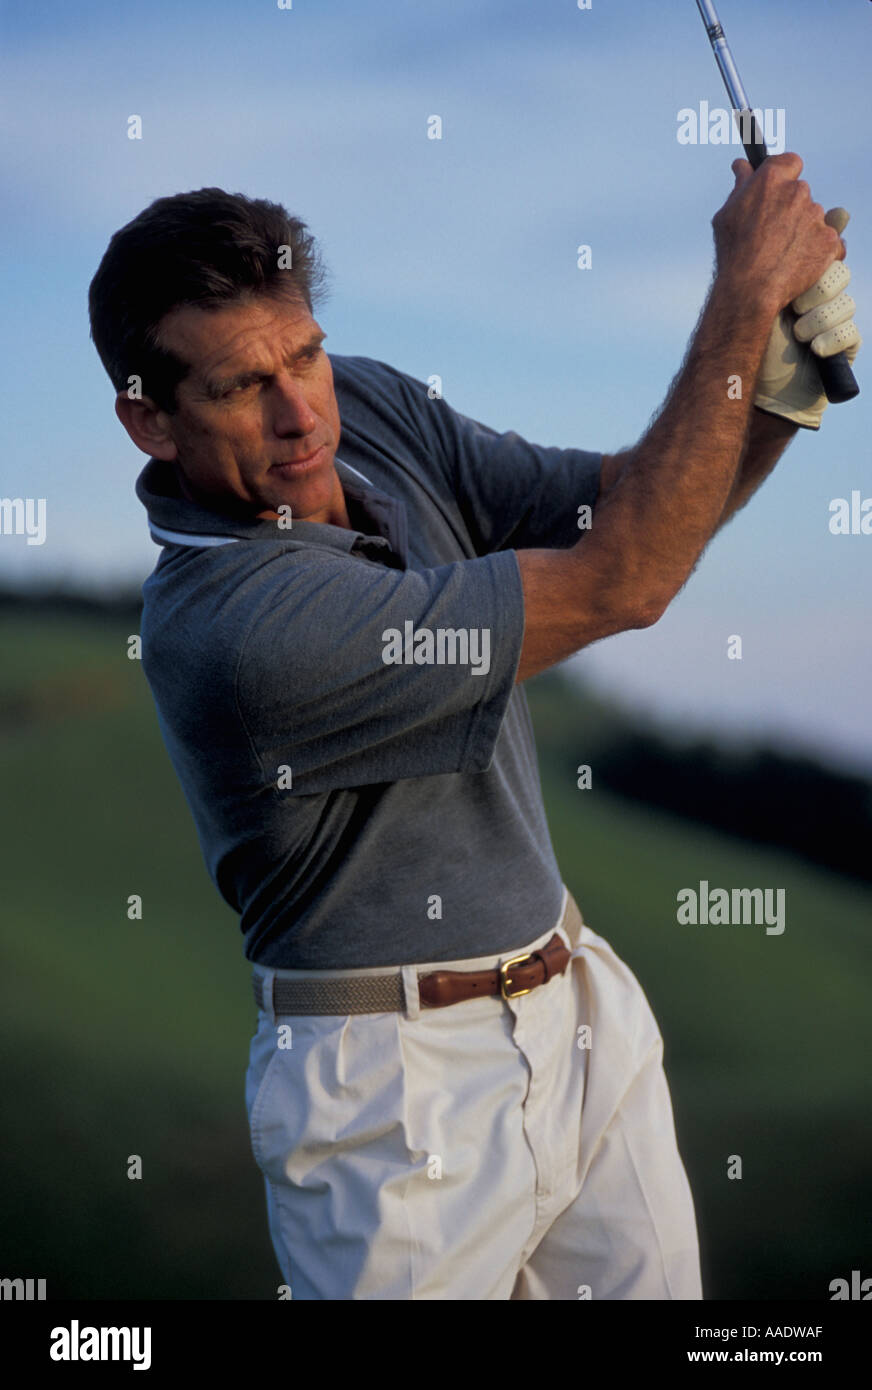 Golfer Abschlag California Stockfoto